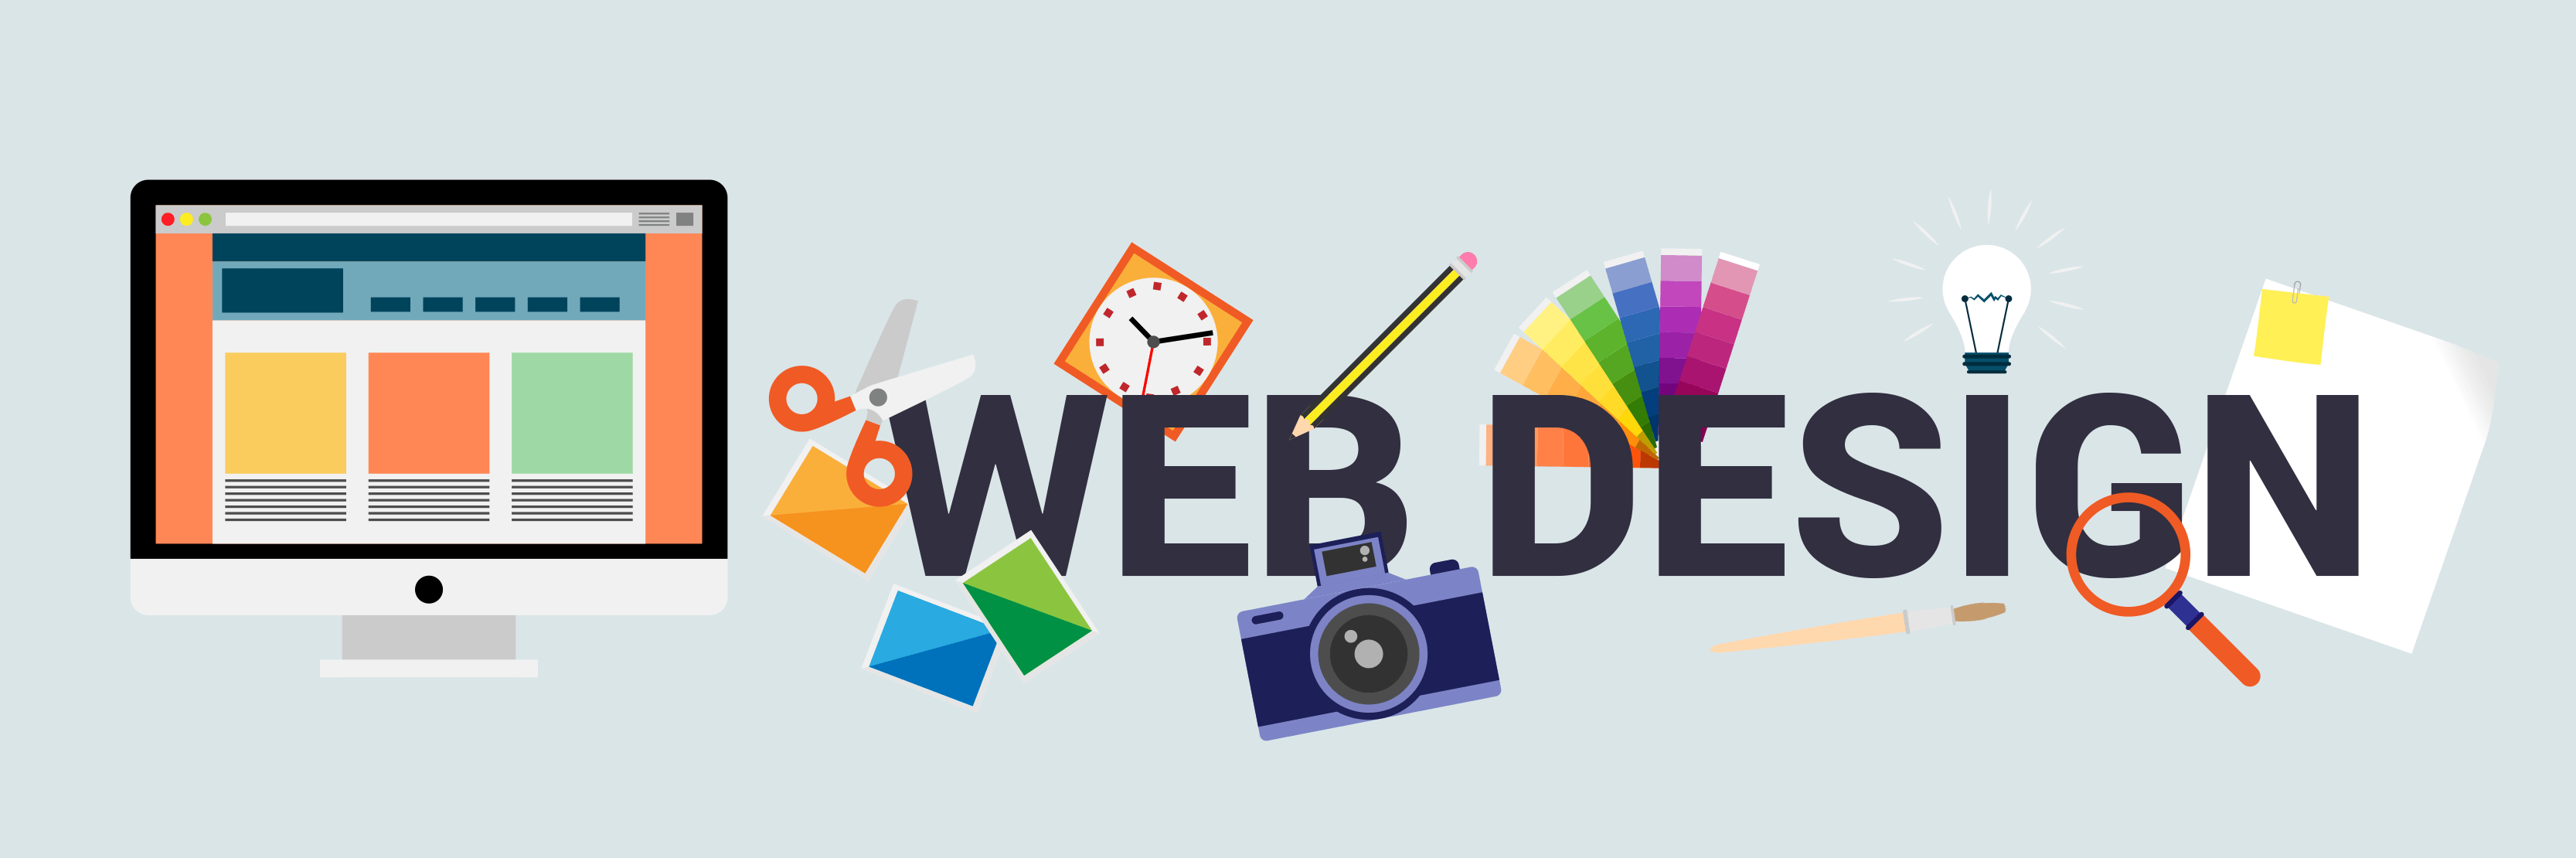 Web Design Logo - NetWeaver Design - Digital Creative Studio | Web Design Bedford ...